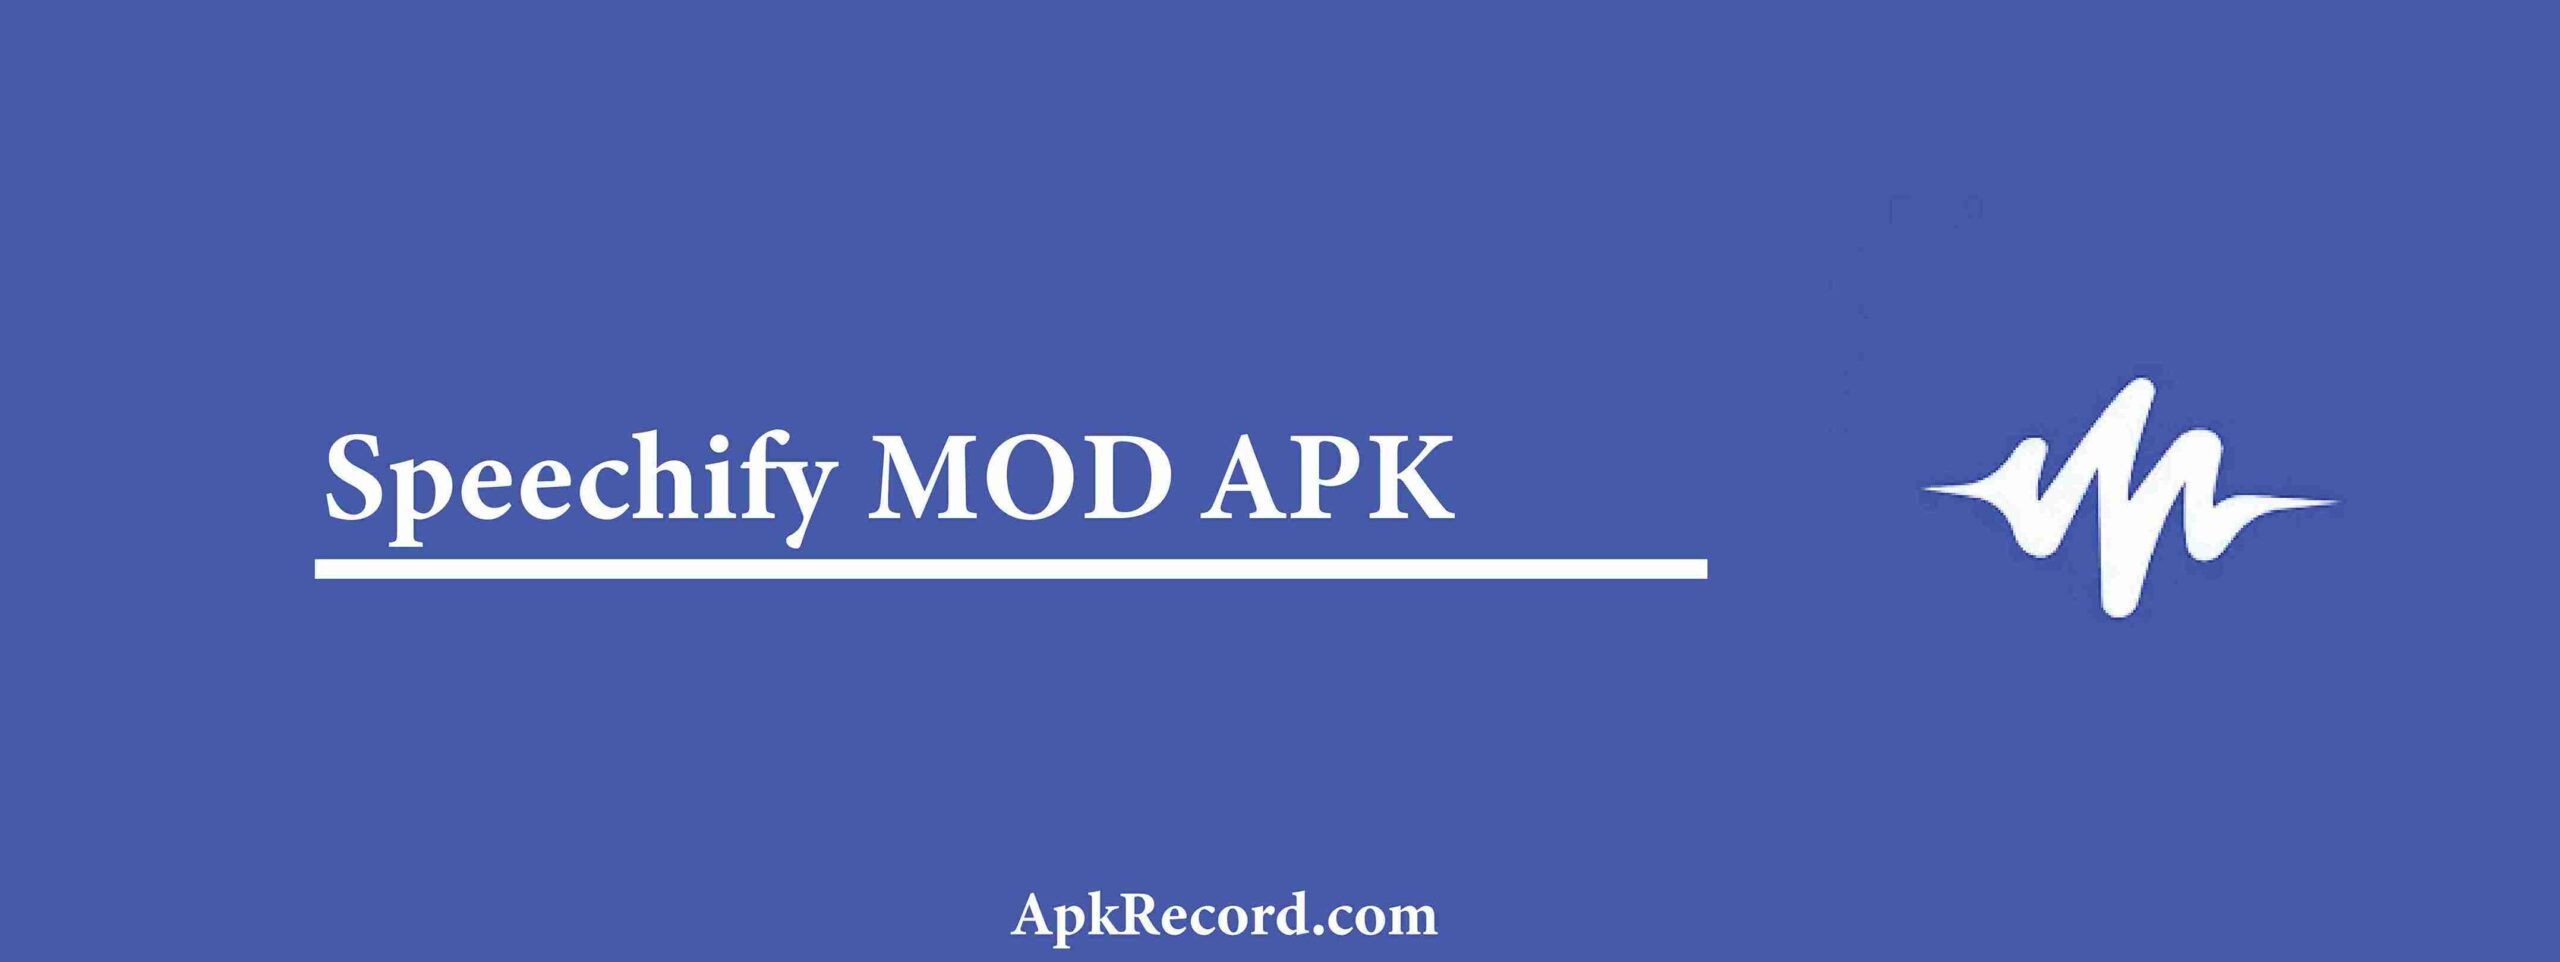 Speechify MOD APK V1.78.9265